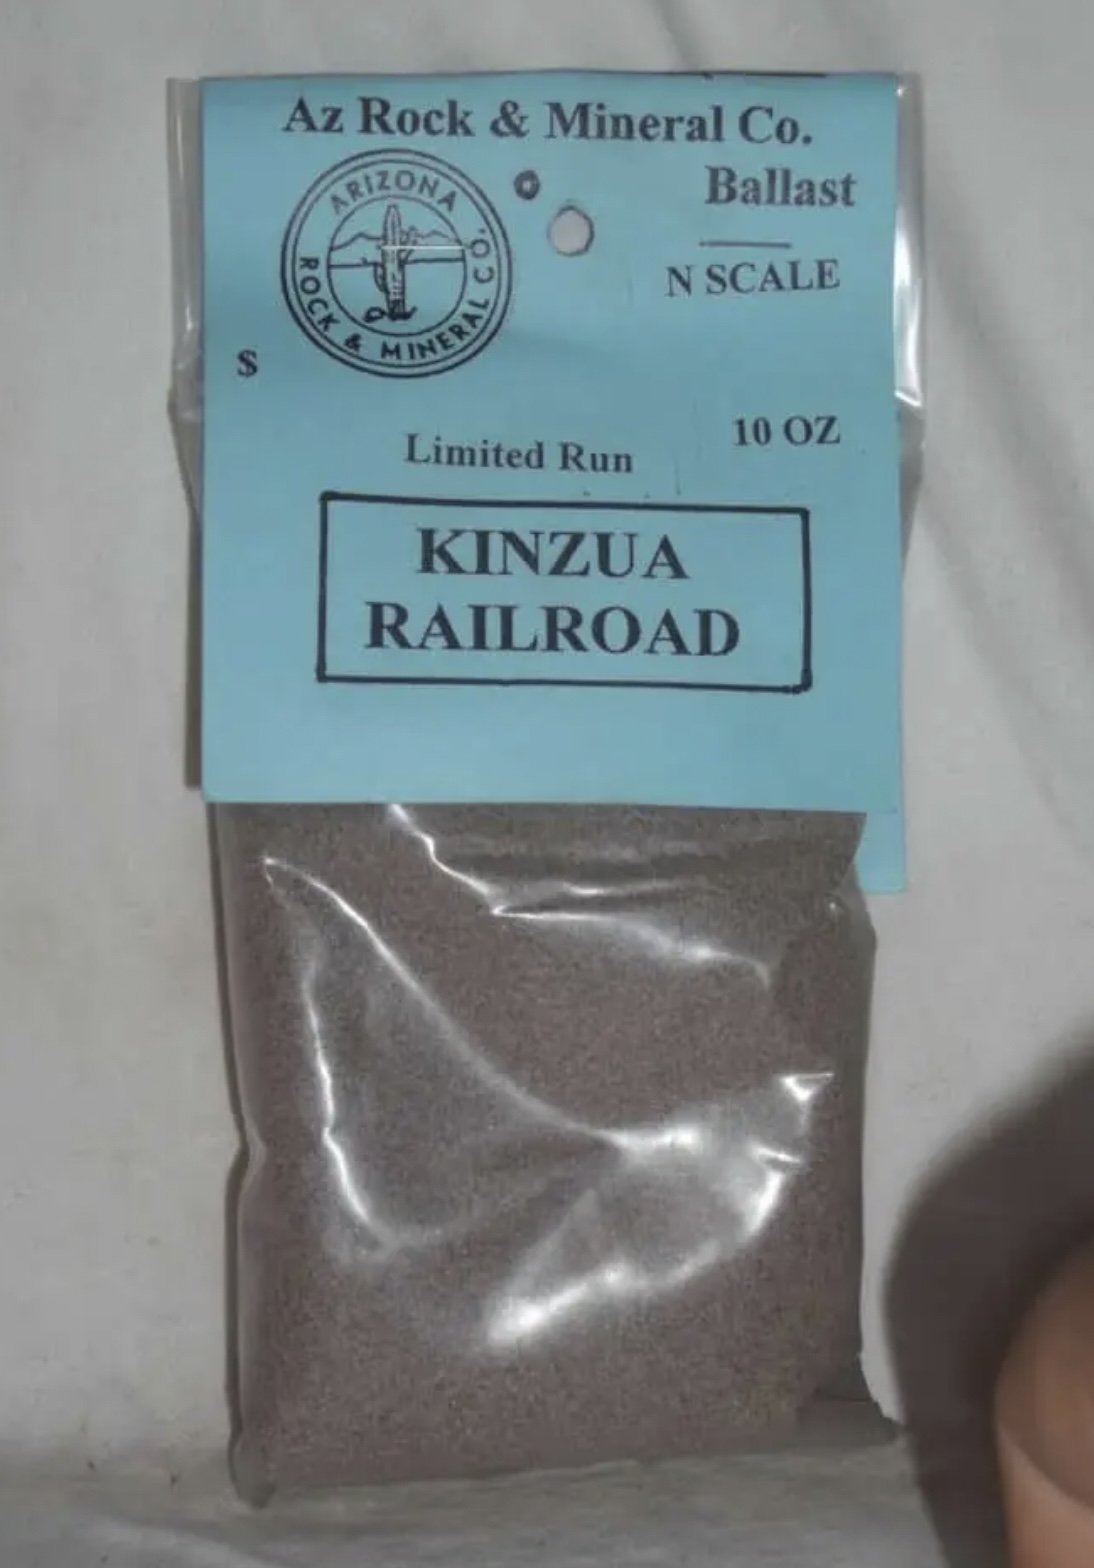 N Scale - Arizona Rock & Mineral - 3001 - Scenery, Railroad, Ballast - Scenery - 10 oz.